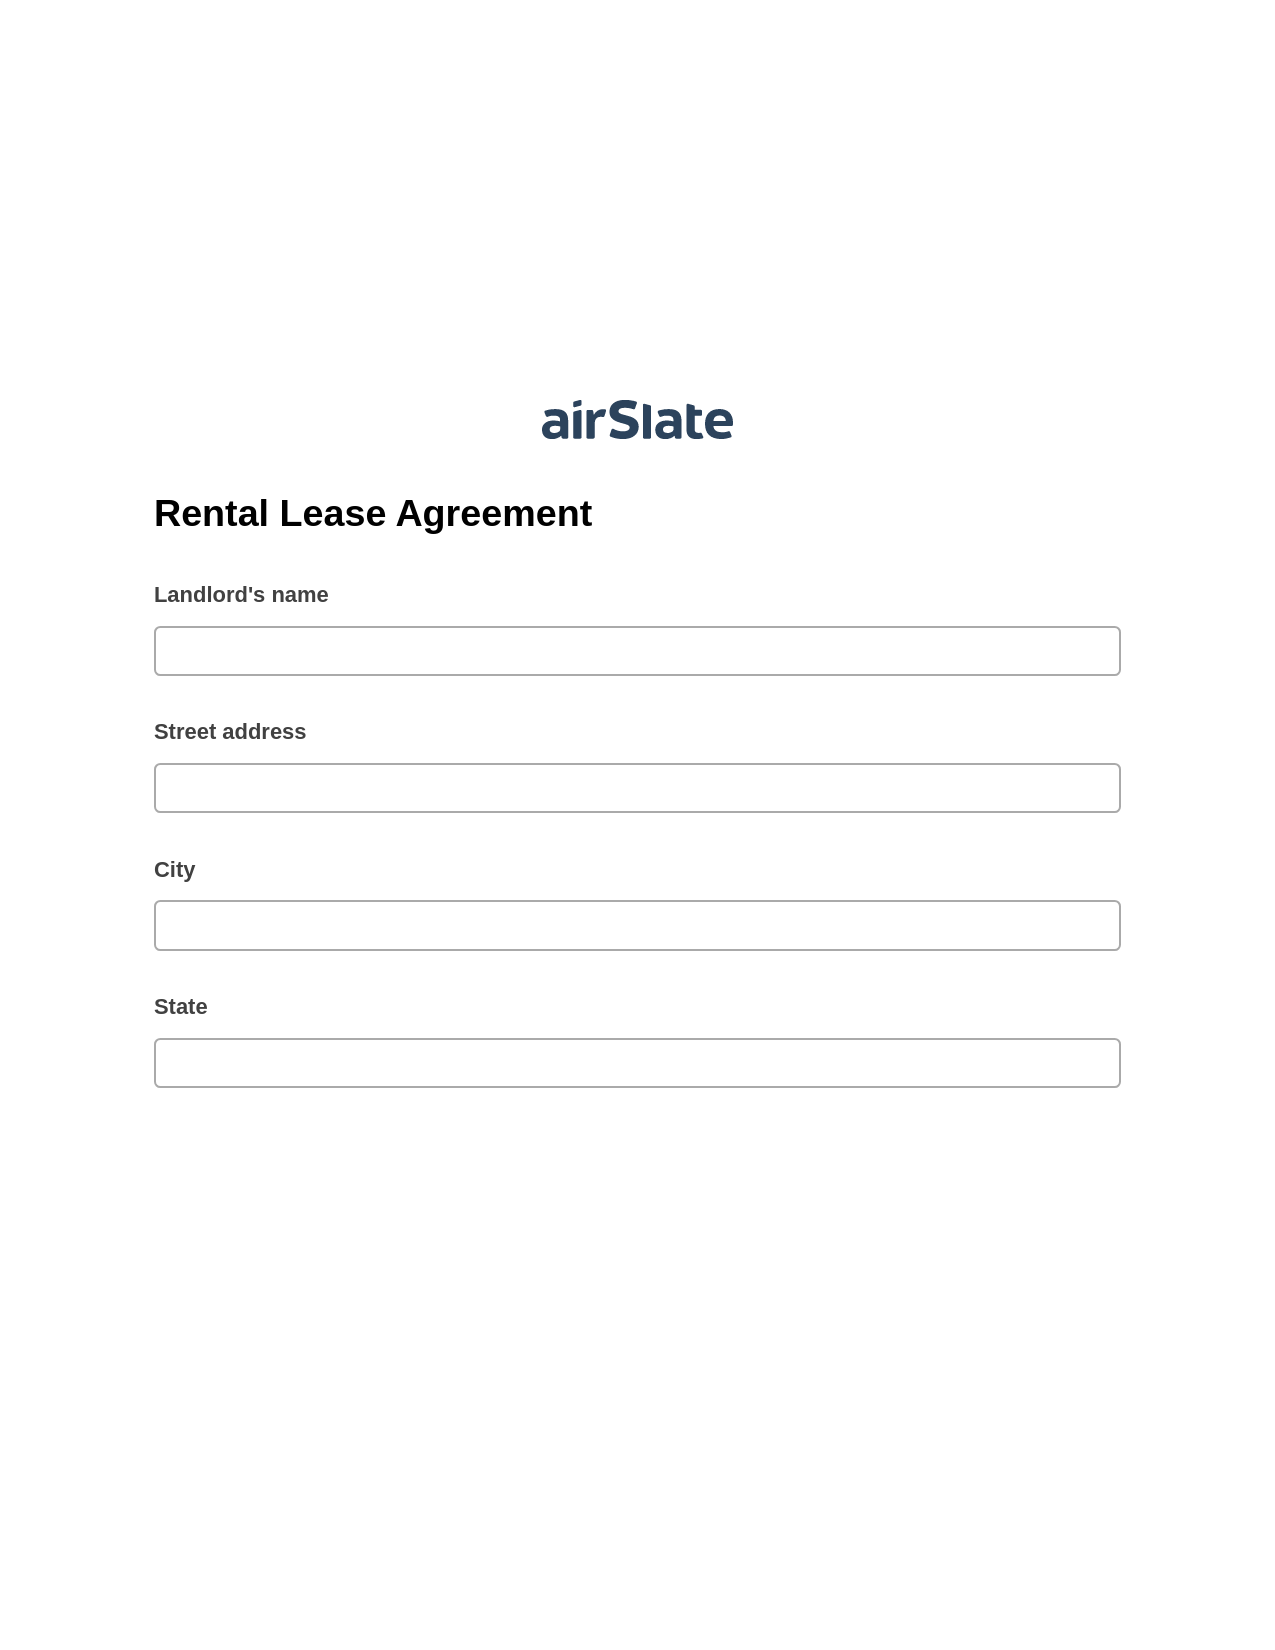 Multirole Rental Lease Agreement Pre-fill from Google Sheet Dropdown Options Bot, Jira Bot, Google Drive Bot